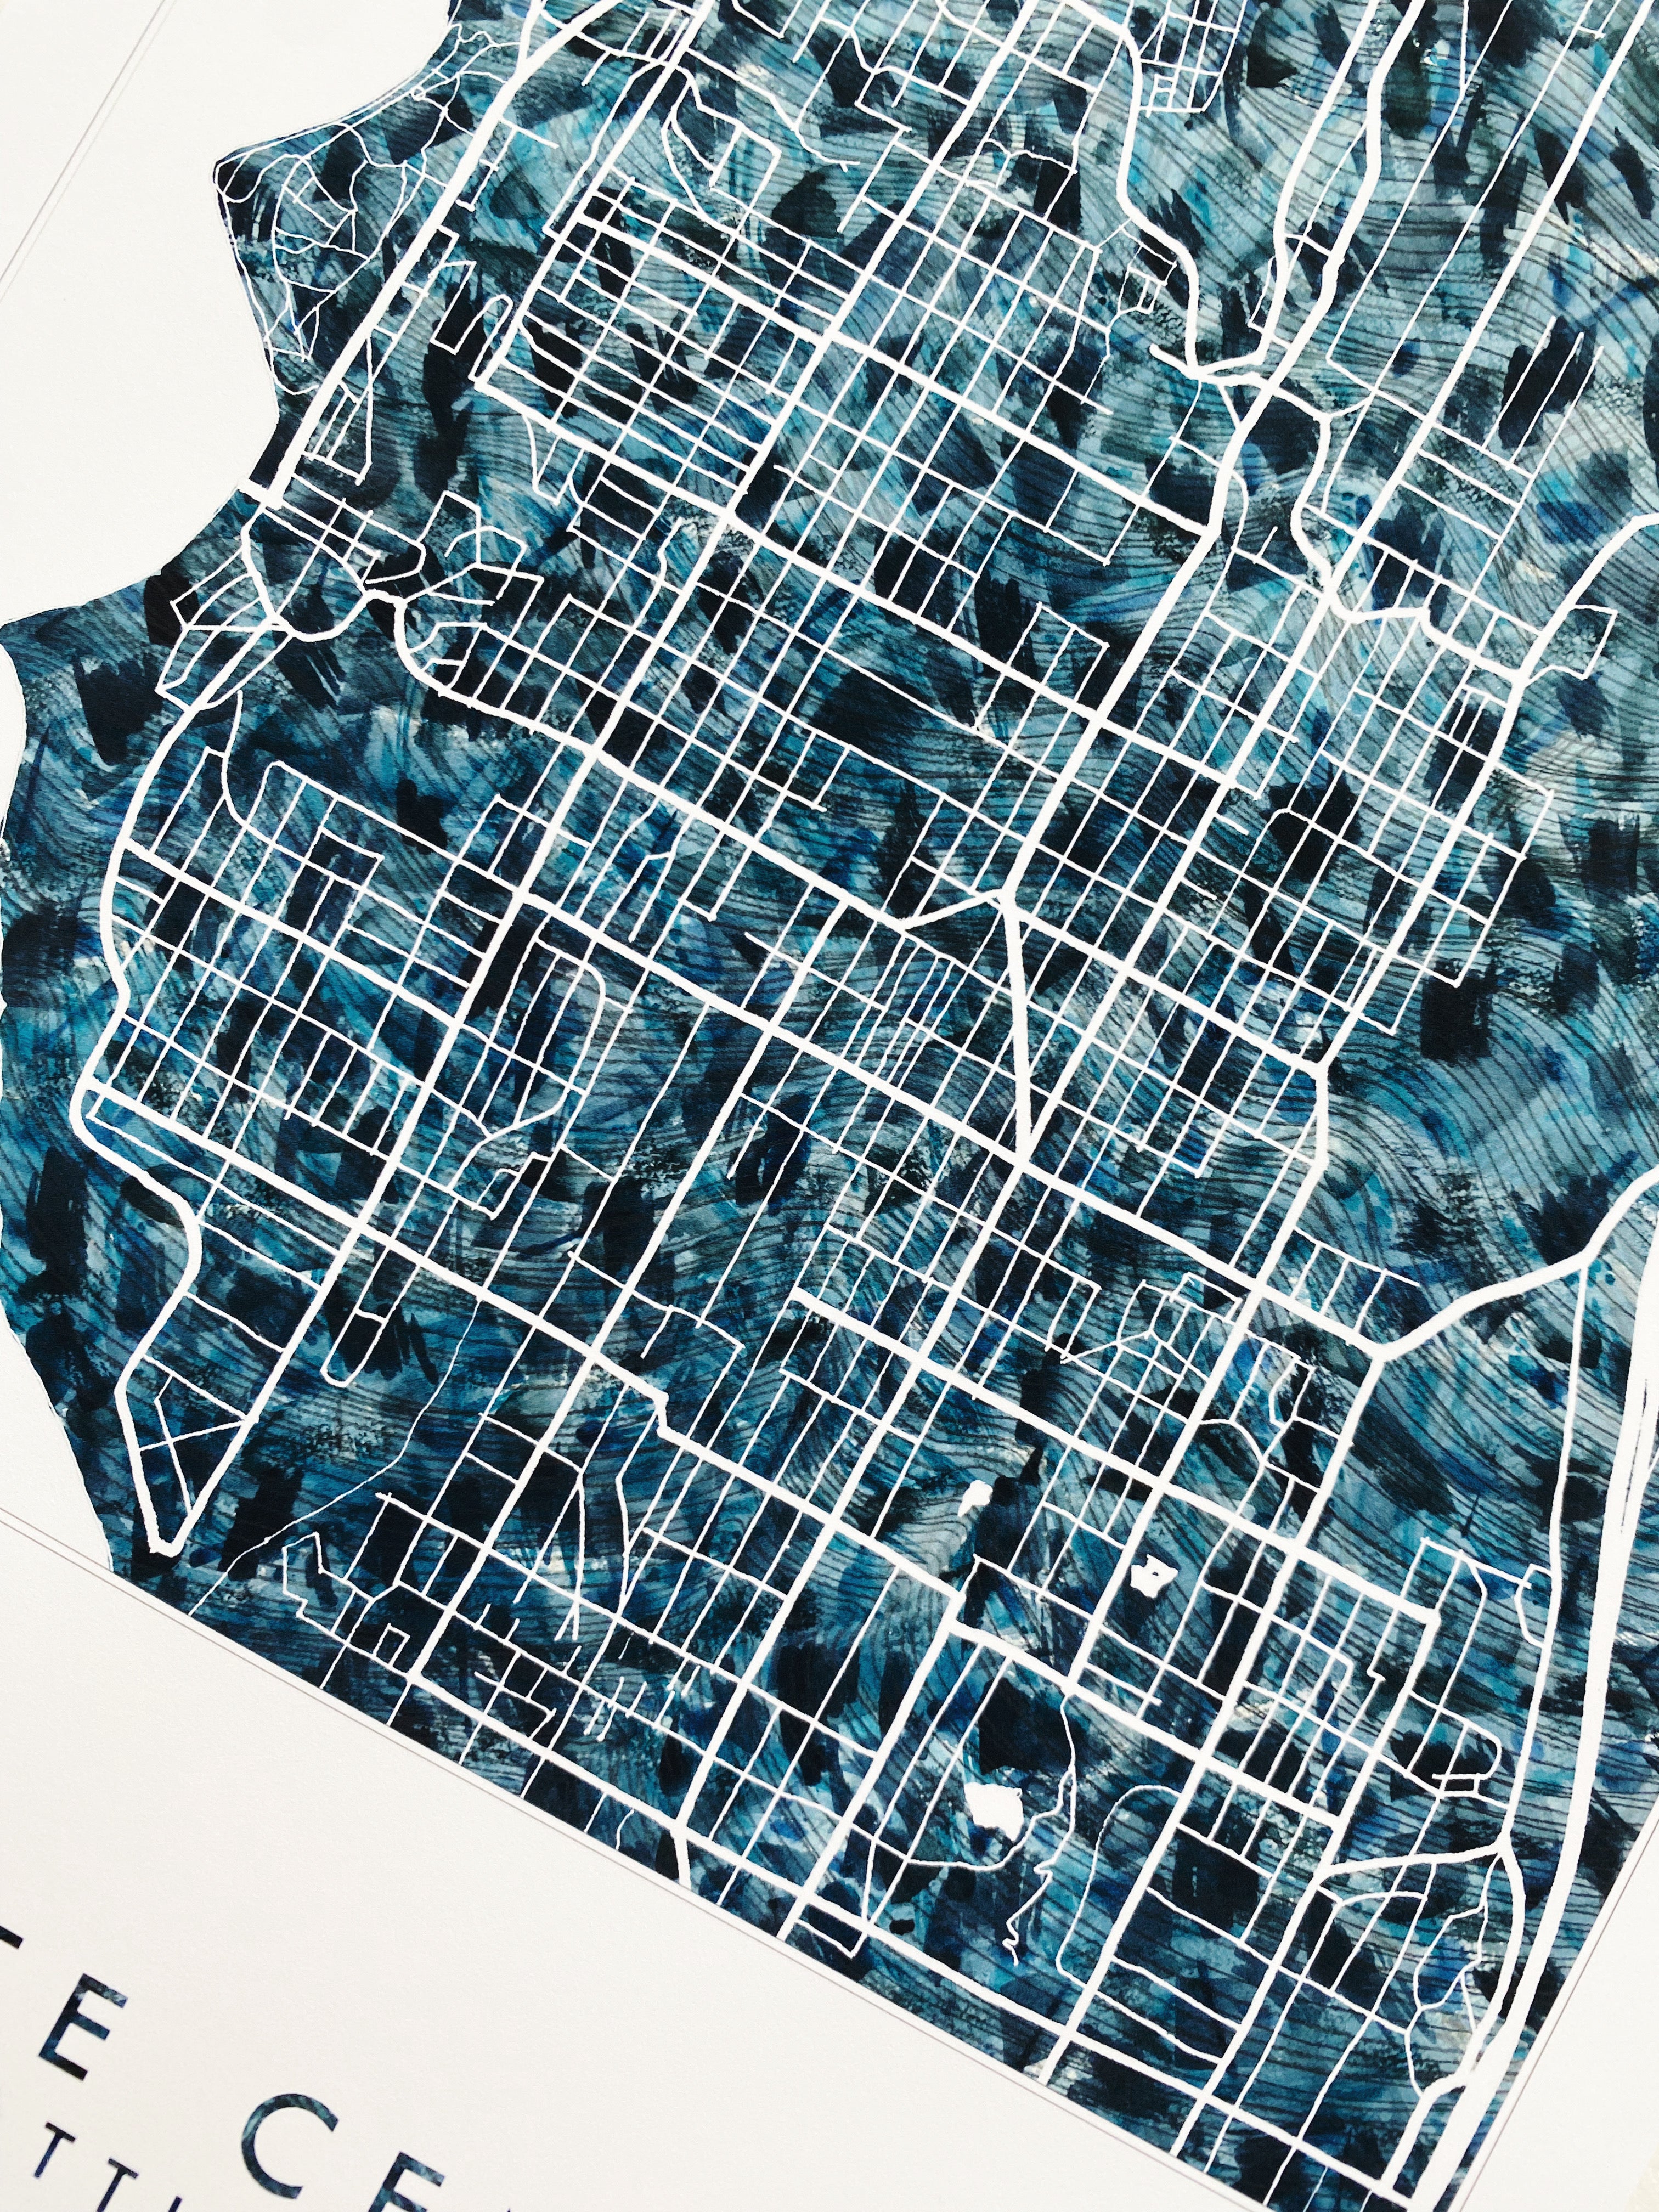 WHITE CENTER West Seattle WA Urban Fabrics City Map: PRINT